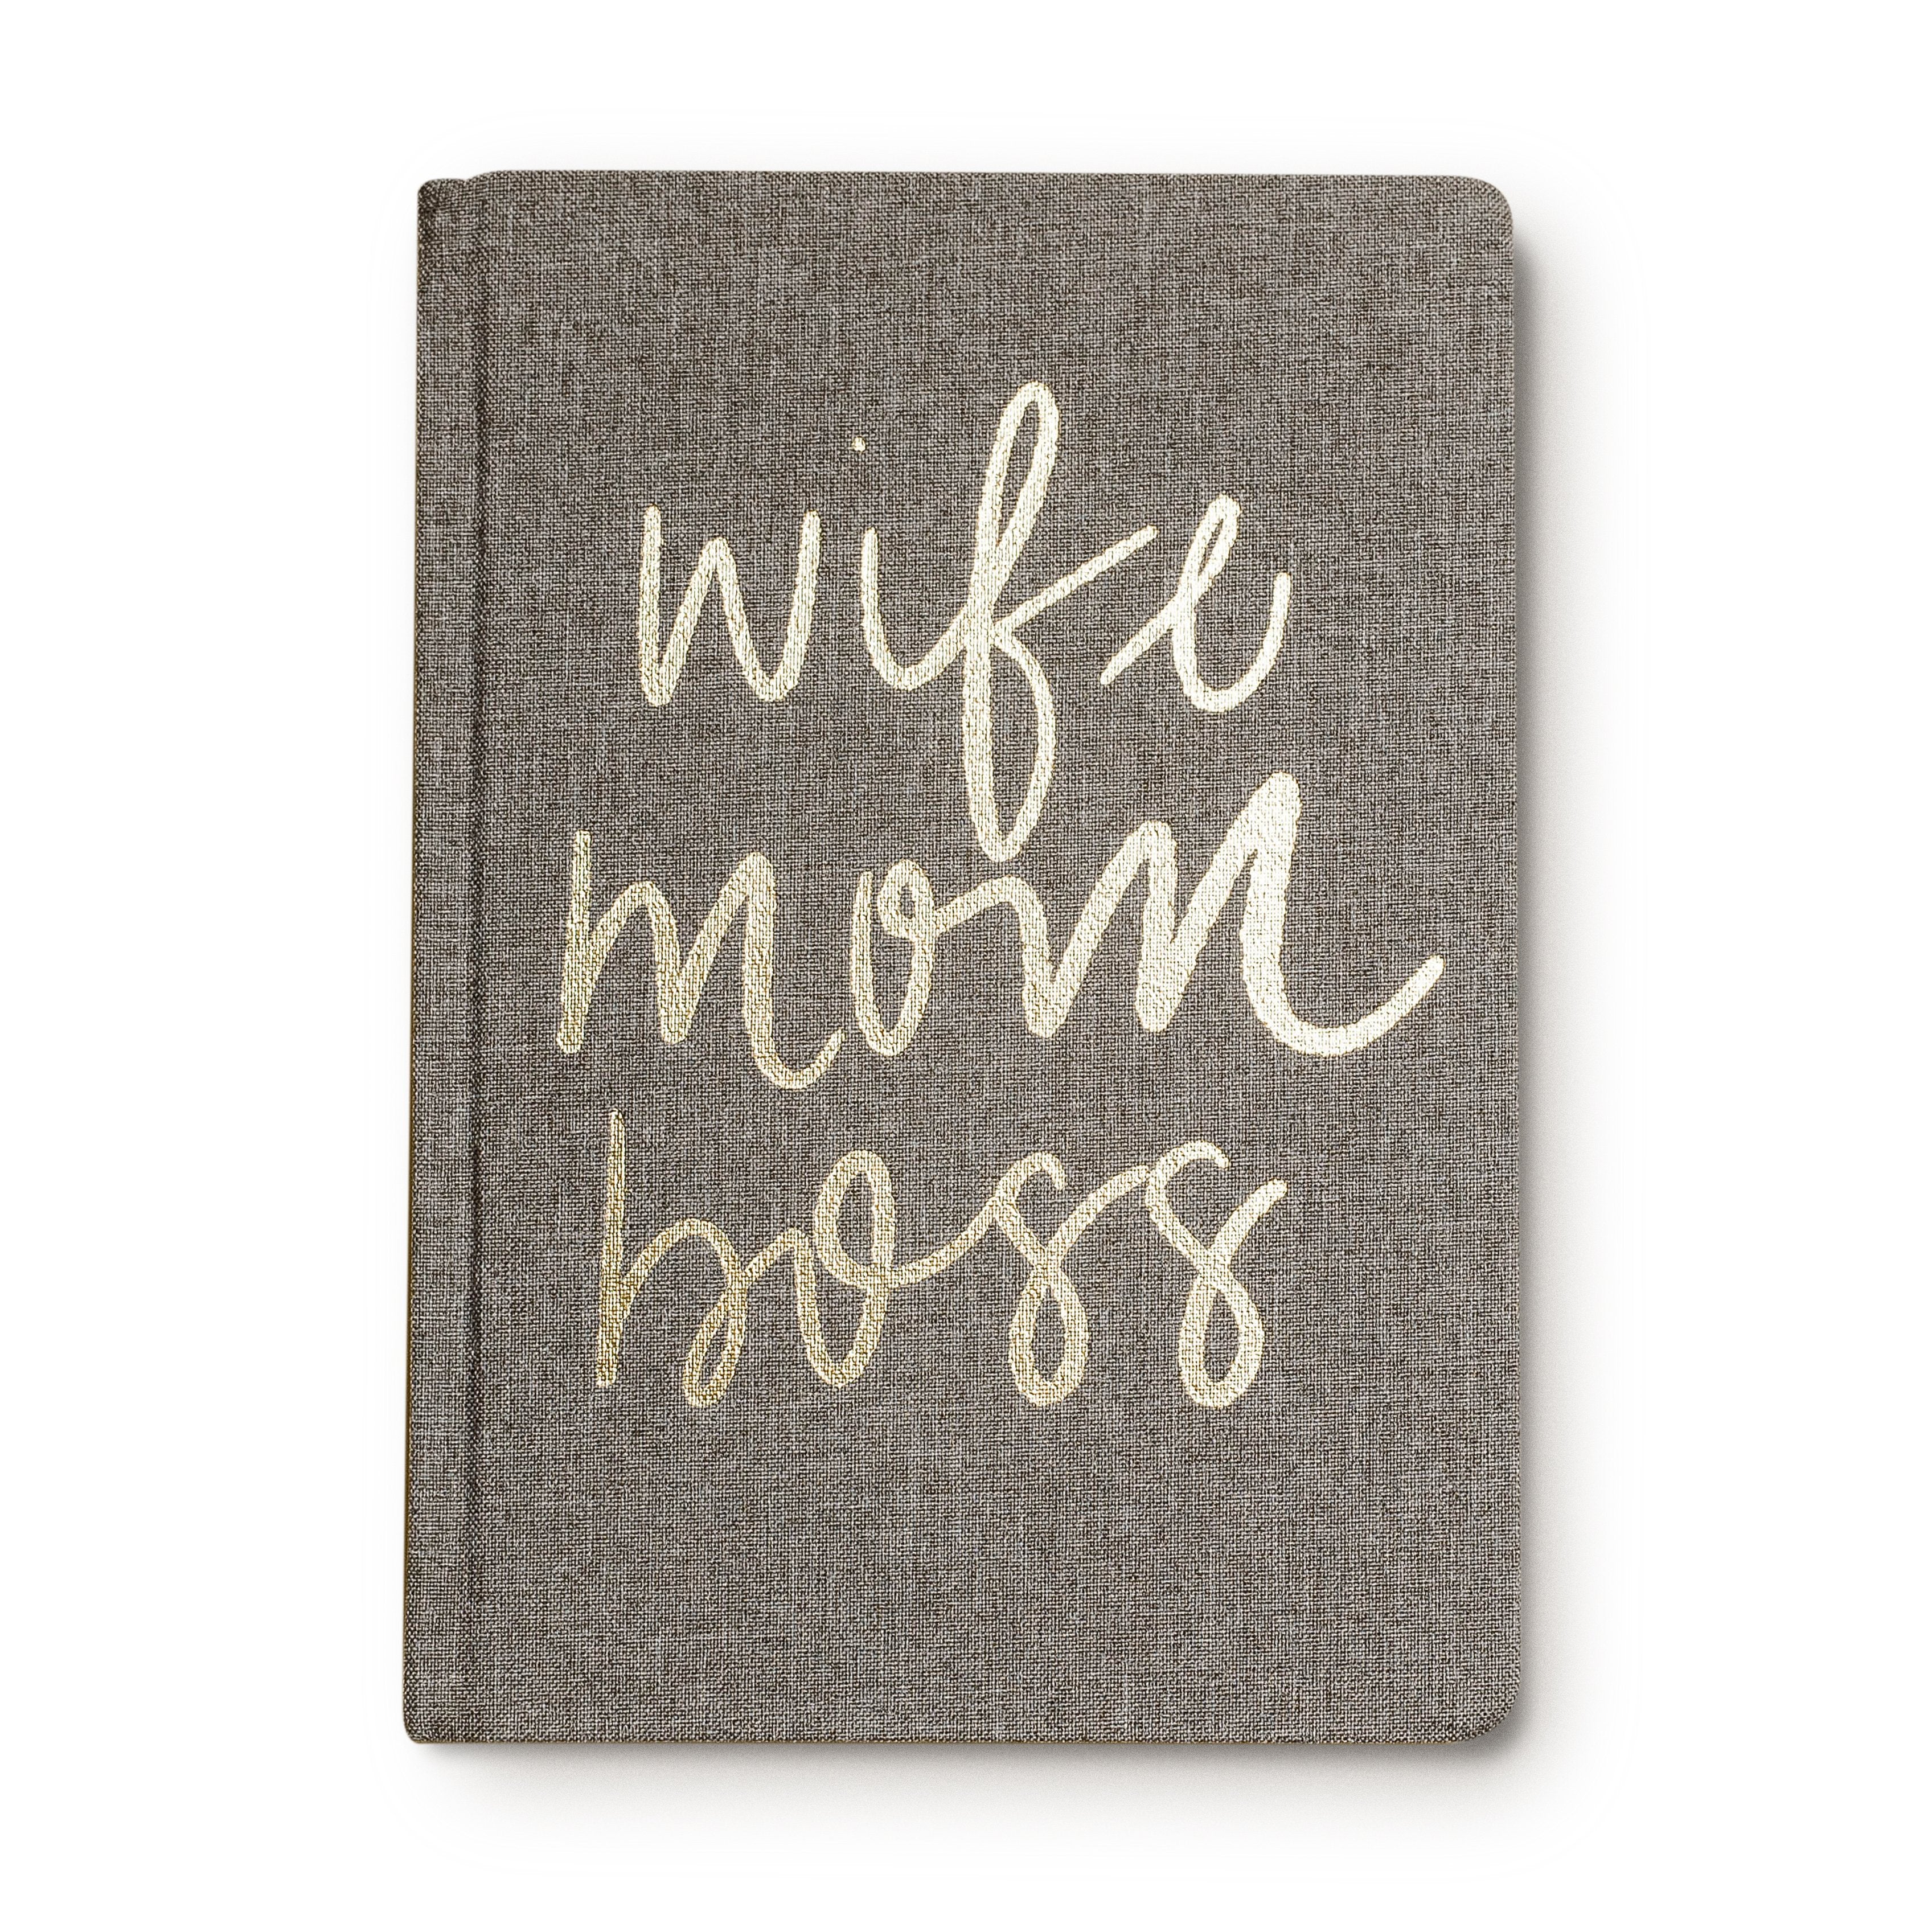 Notebook - Fabric Wife Mom Boss